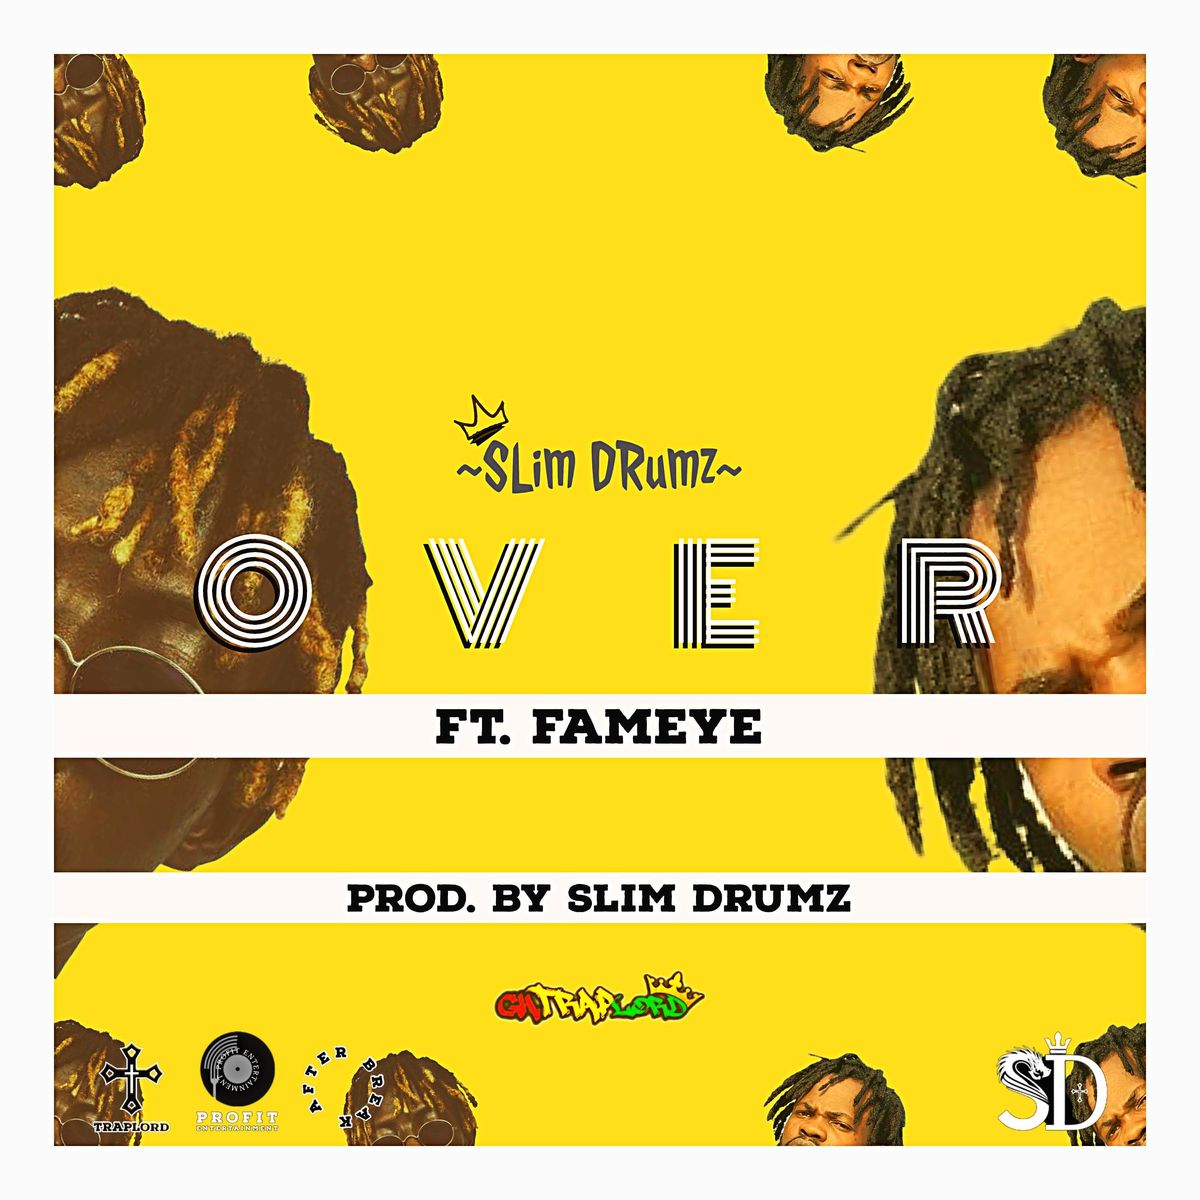 Slim Drumz - Over ft Fameye